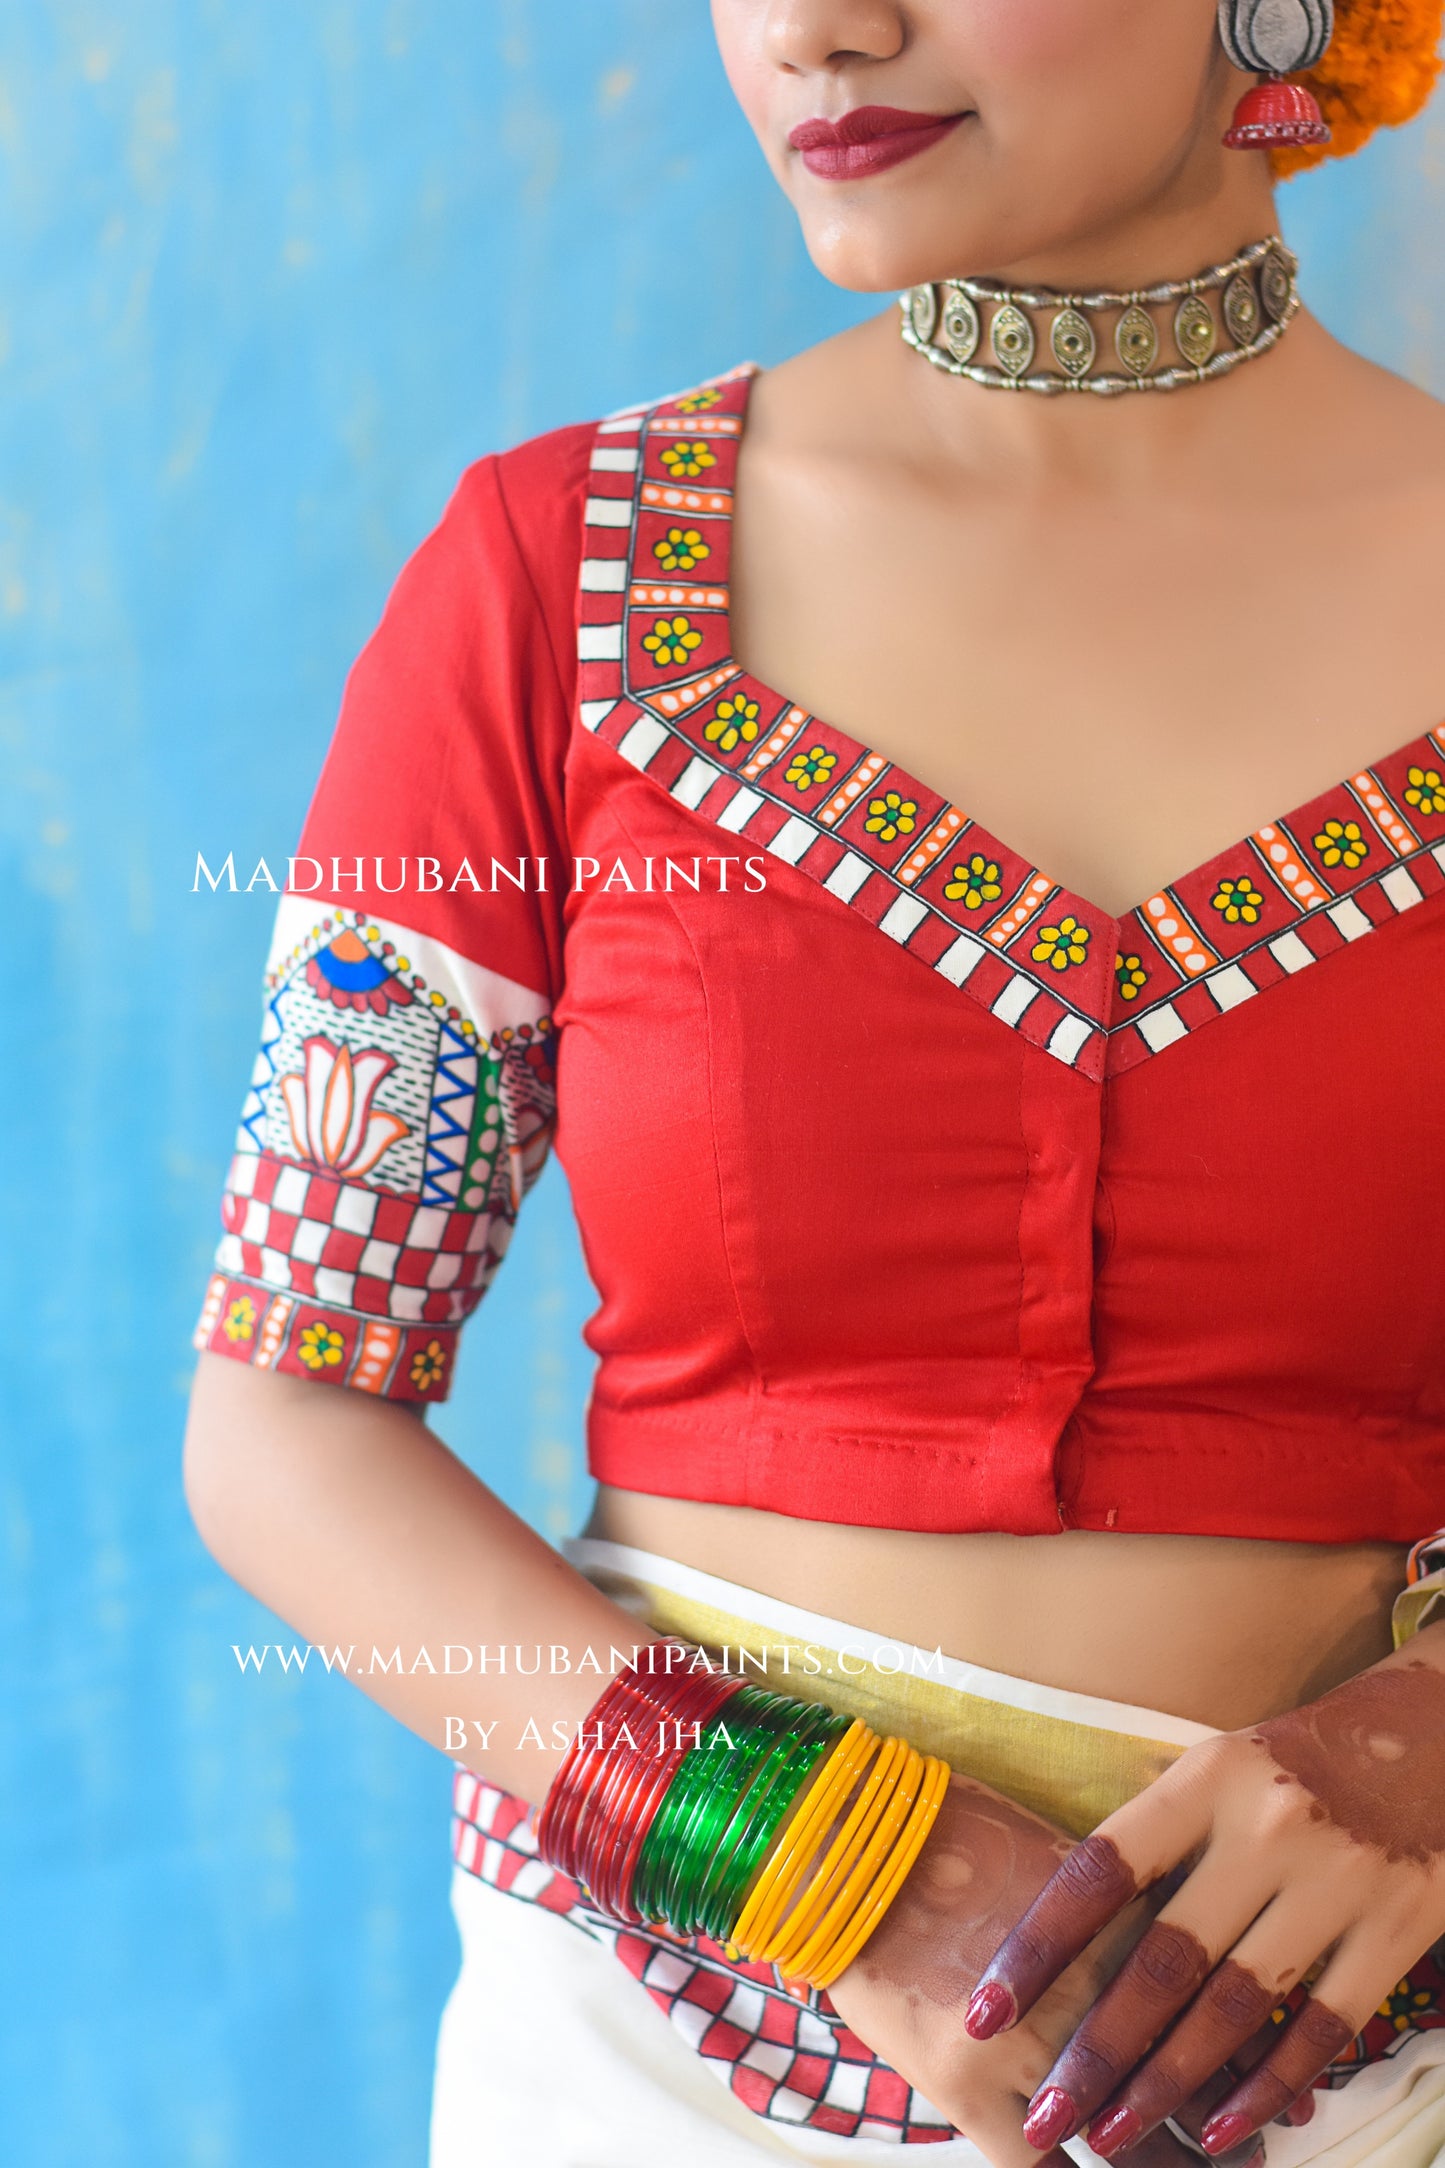 BHAIRAVI Hand-painted Madhubani Handloom Cotton Blouse